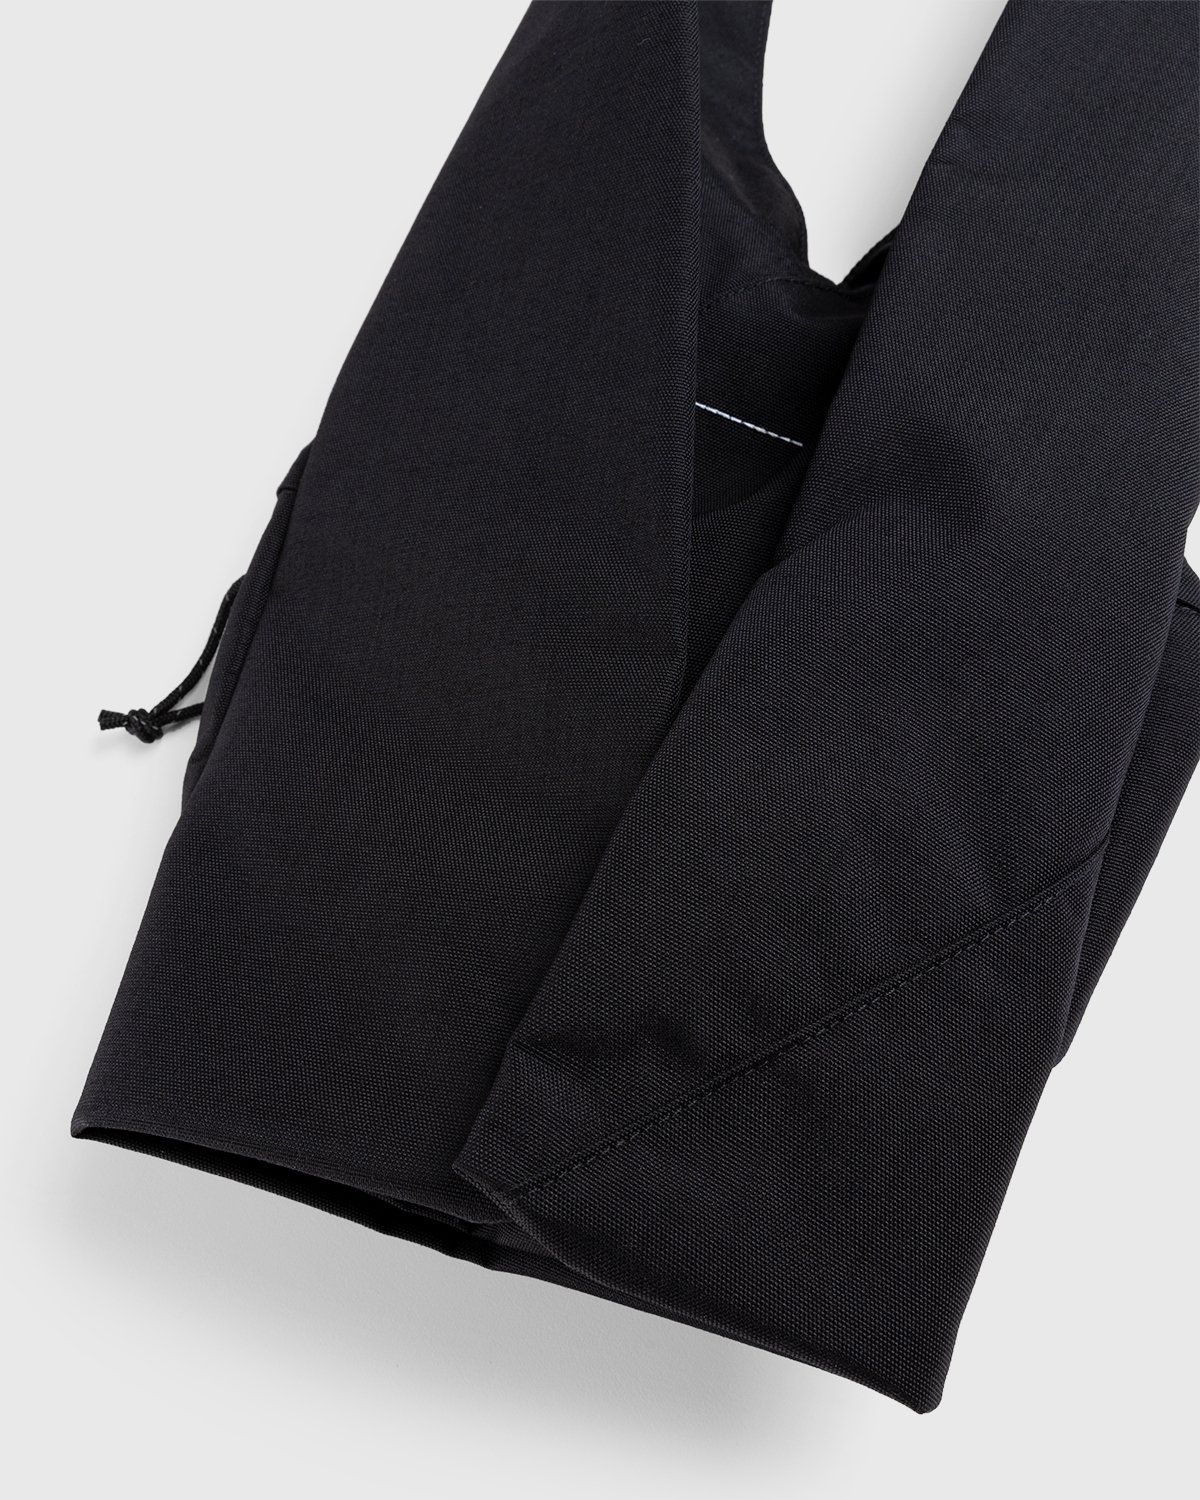 MM6 Maison Margiela x Eastpak – Borsa Shopping Bag Black - Shoulder Bags - Black - Image 6